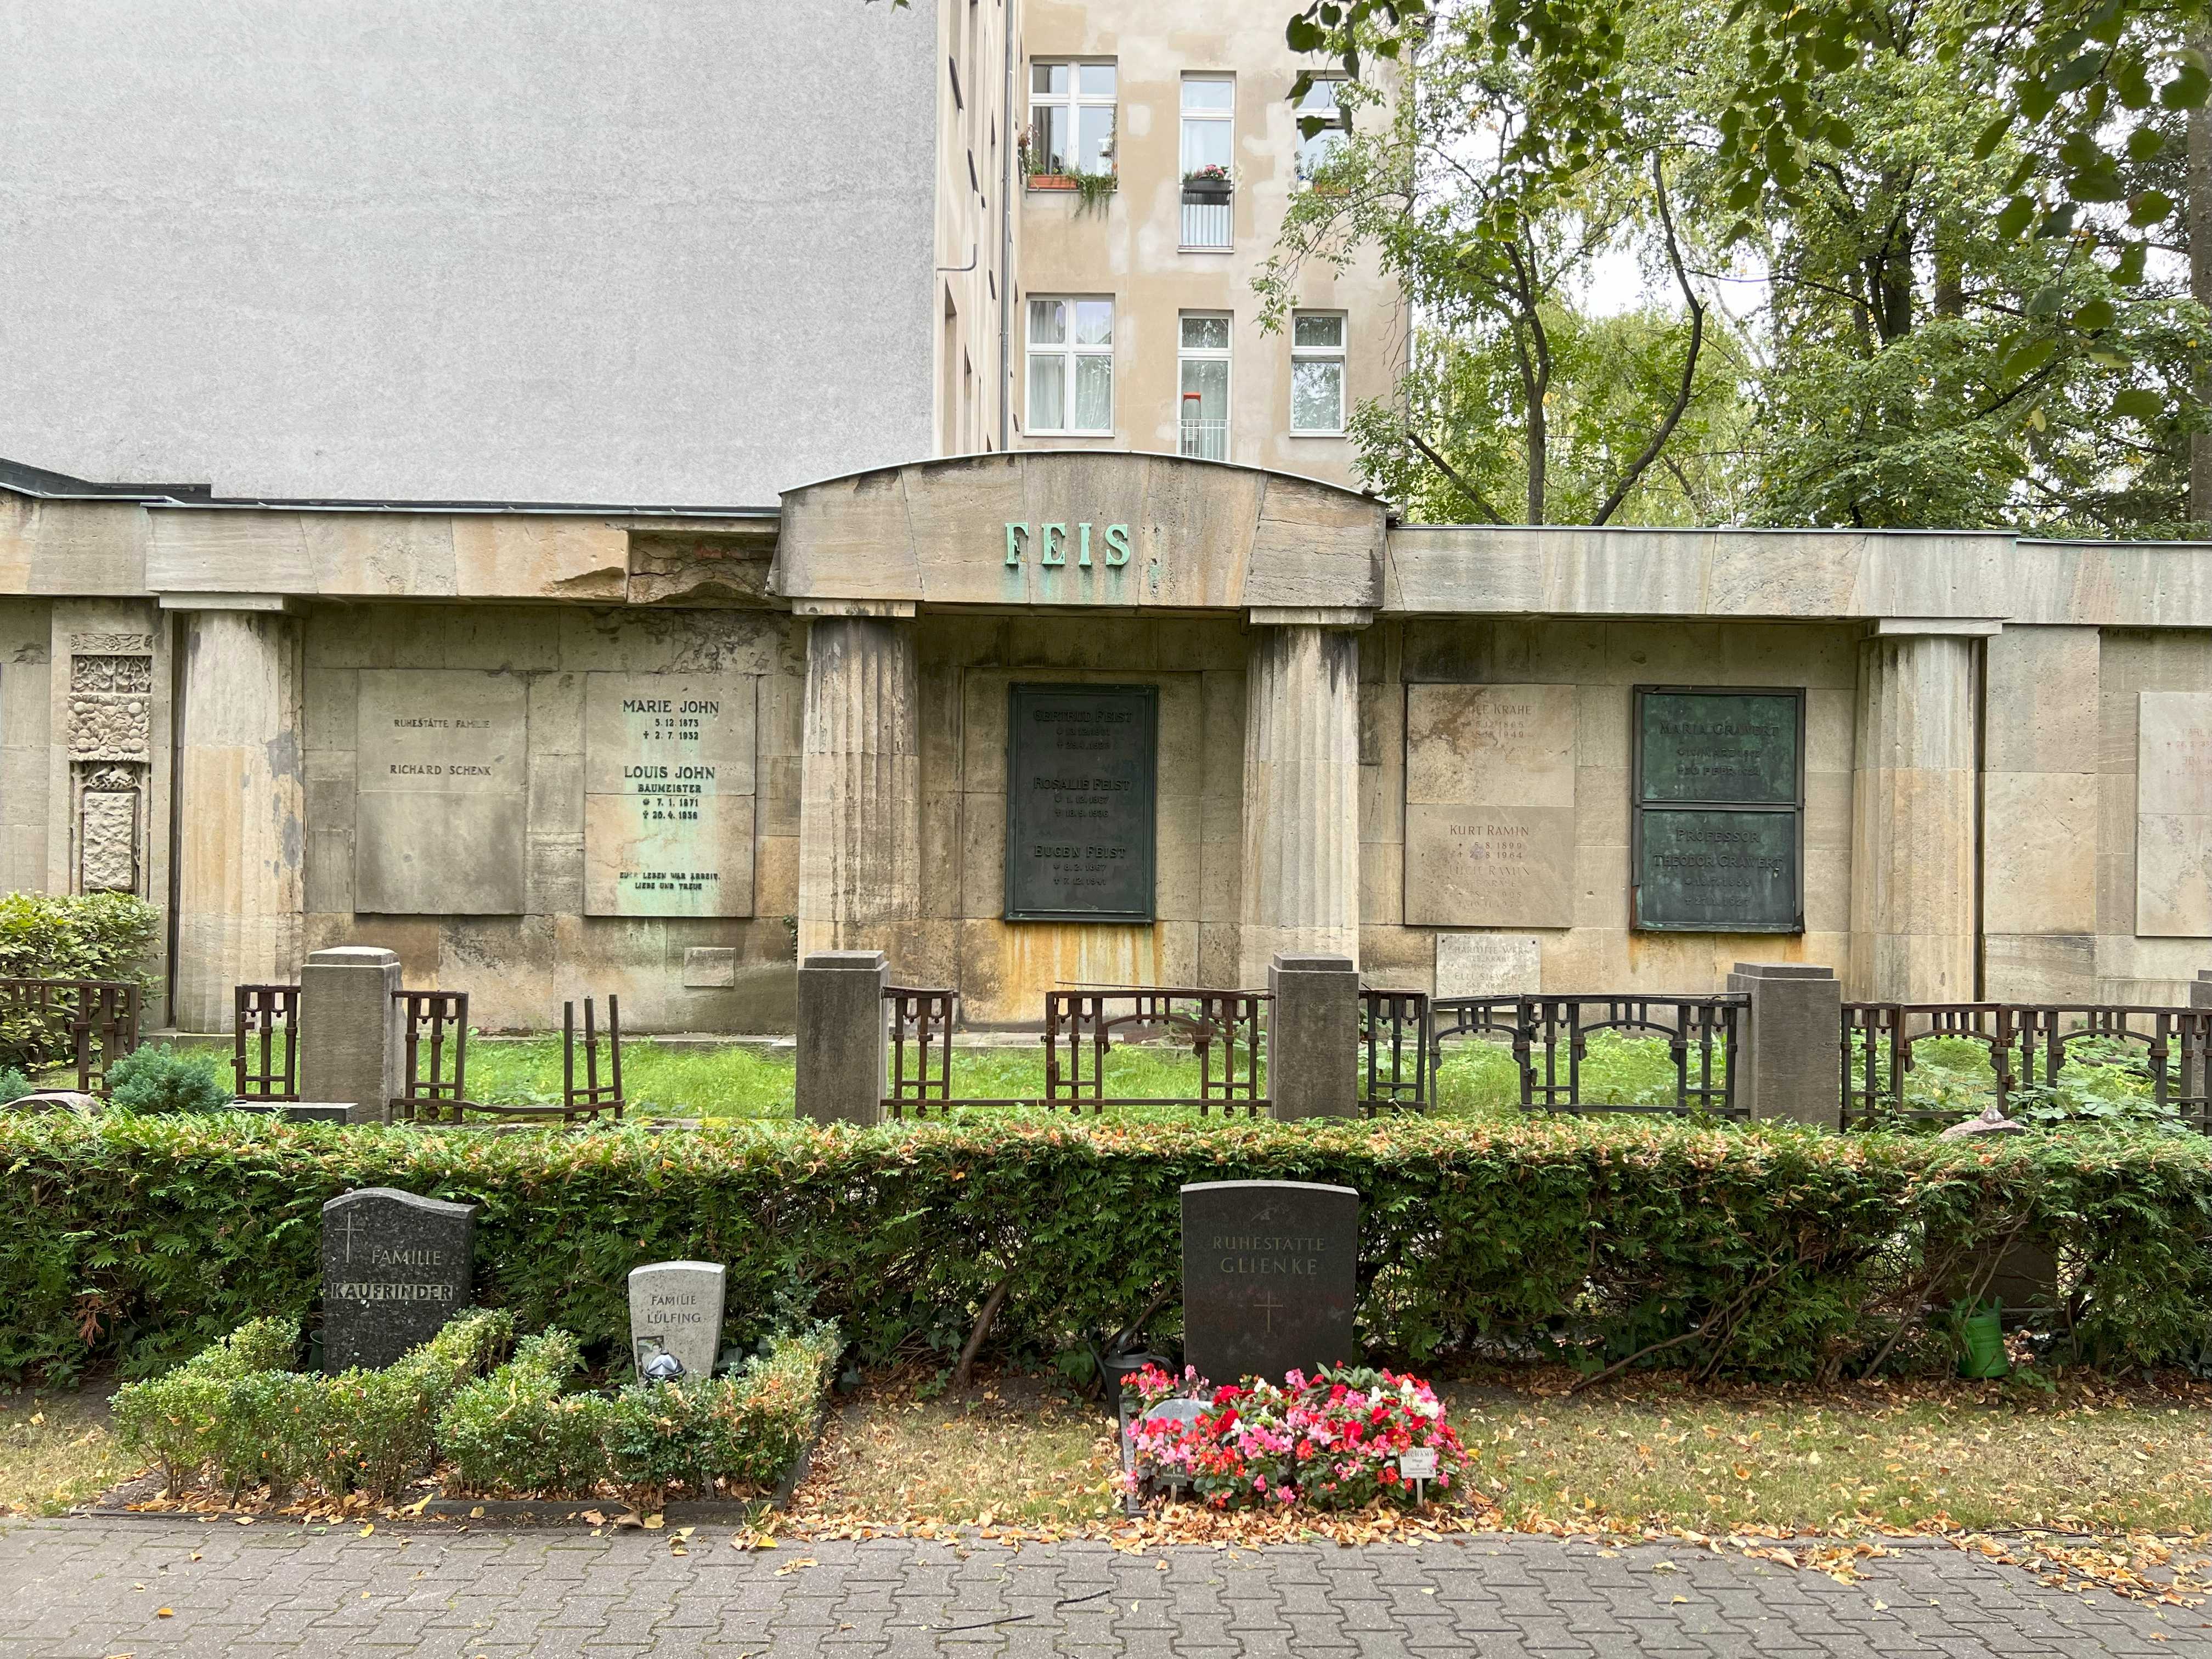 Grabstein Auguste Krähe, geb. Schöppe, Friedhof Wilmersdorf, Berlin